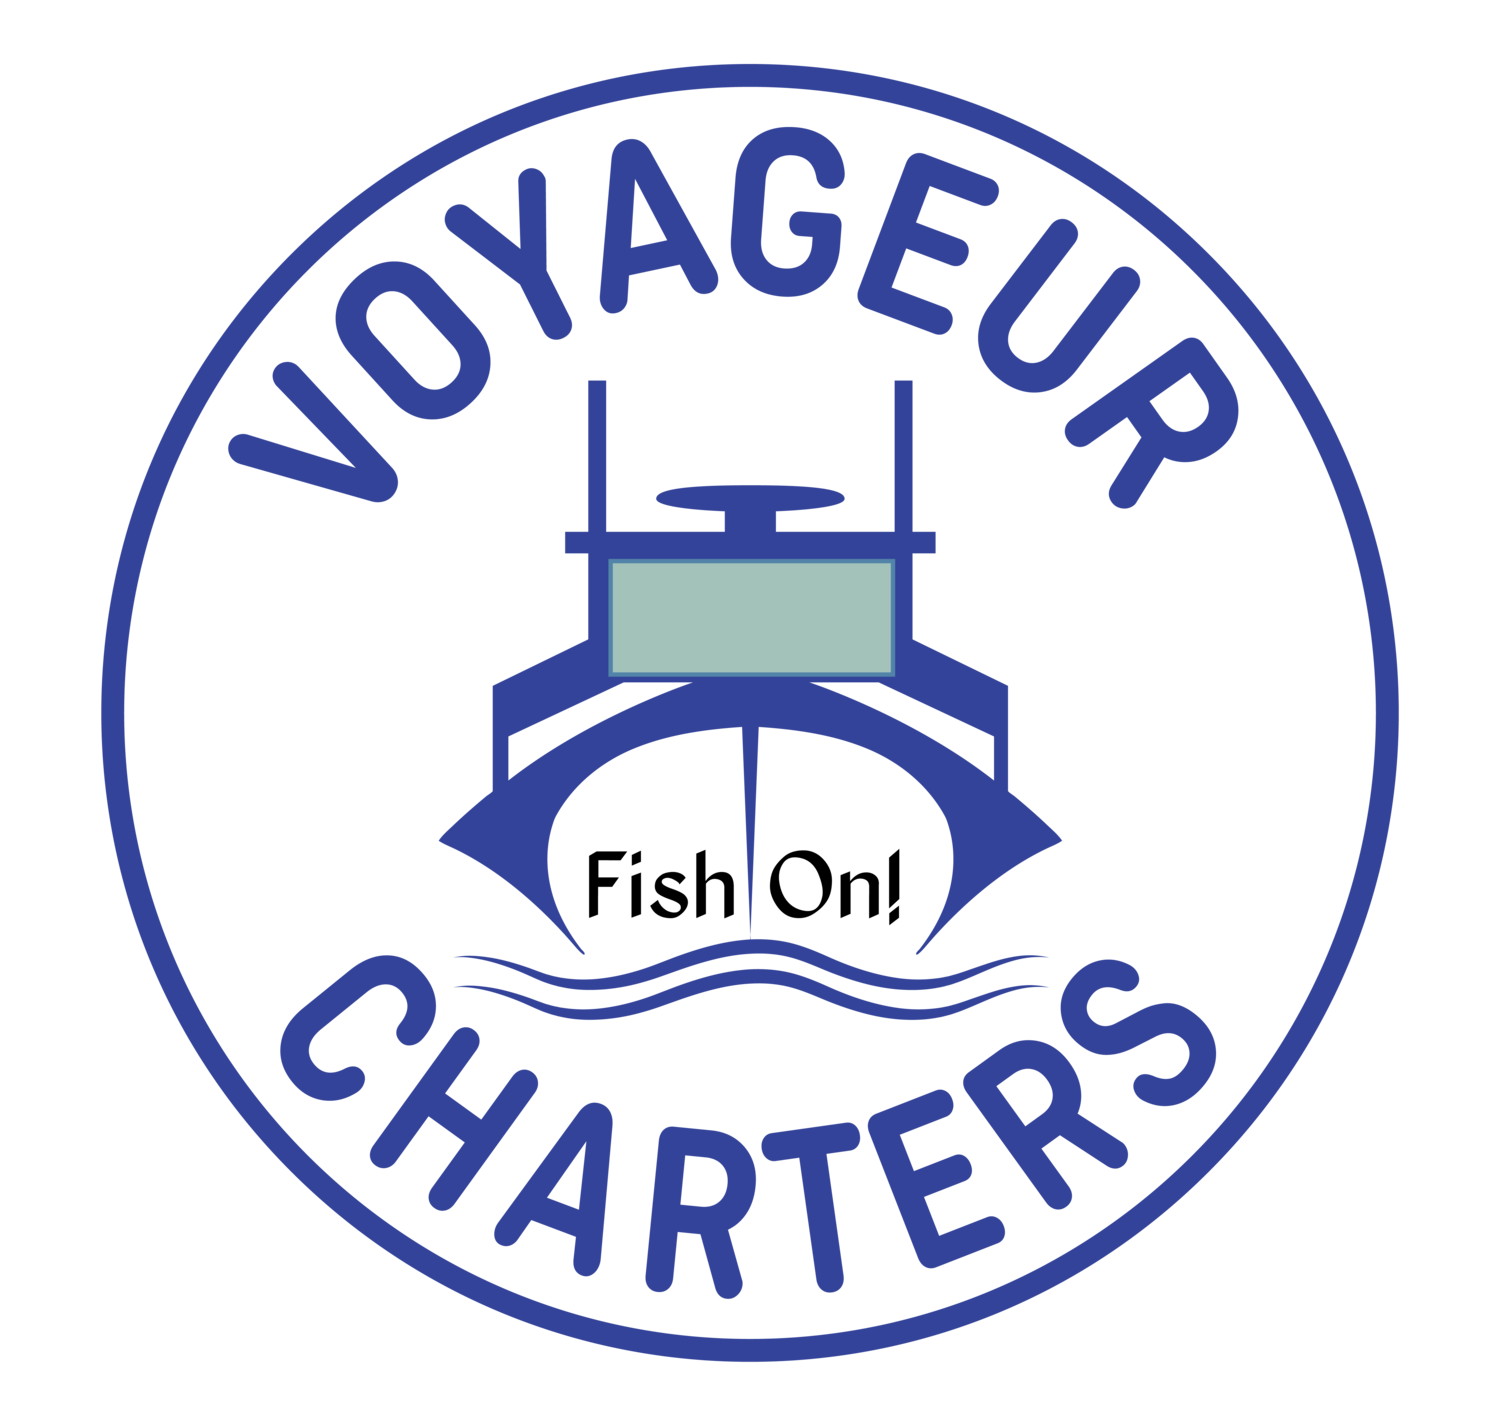 Voyageur Charters